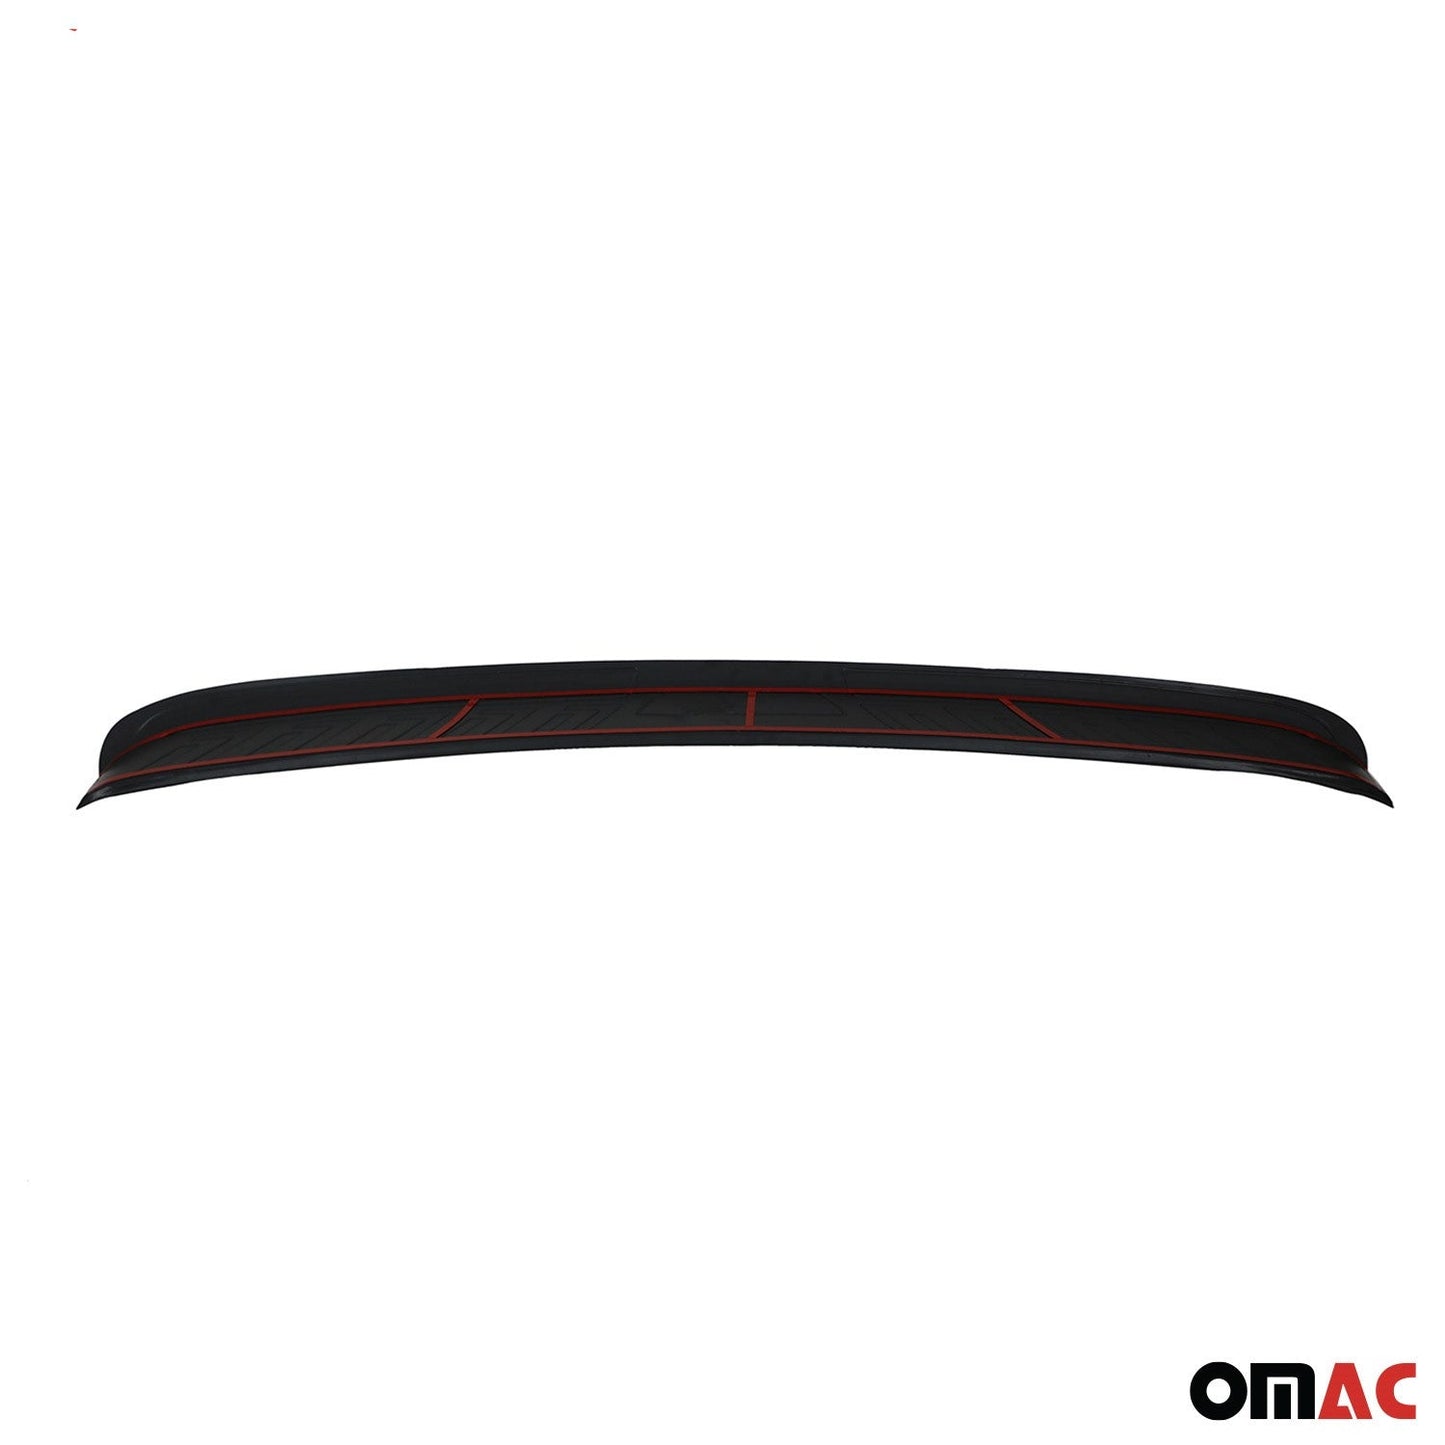 OMAC Rear Bumper Sill Cover Protector Guard for Honda CR-V 2012-2016 ABS Black 1Pc OMAC3407093PT